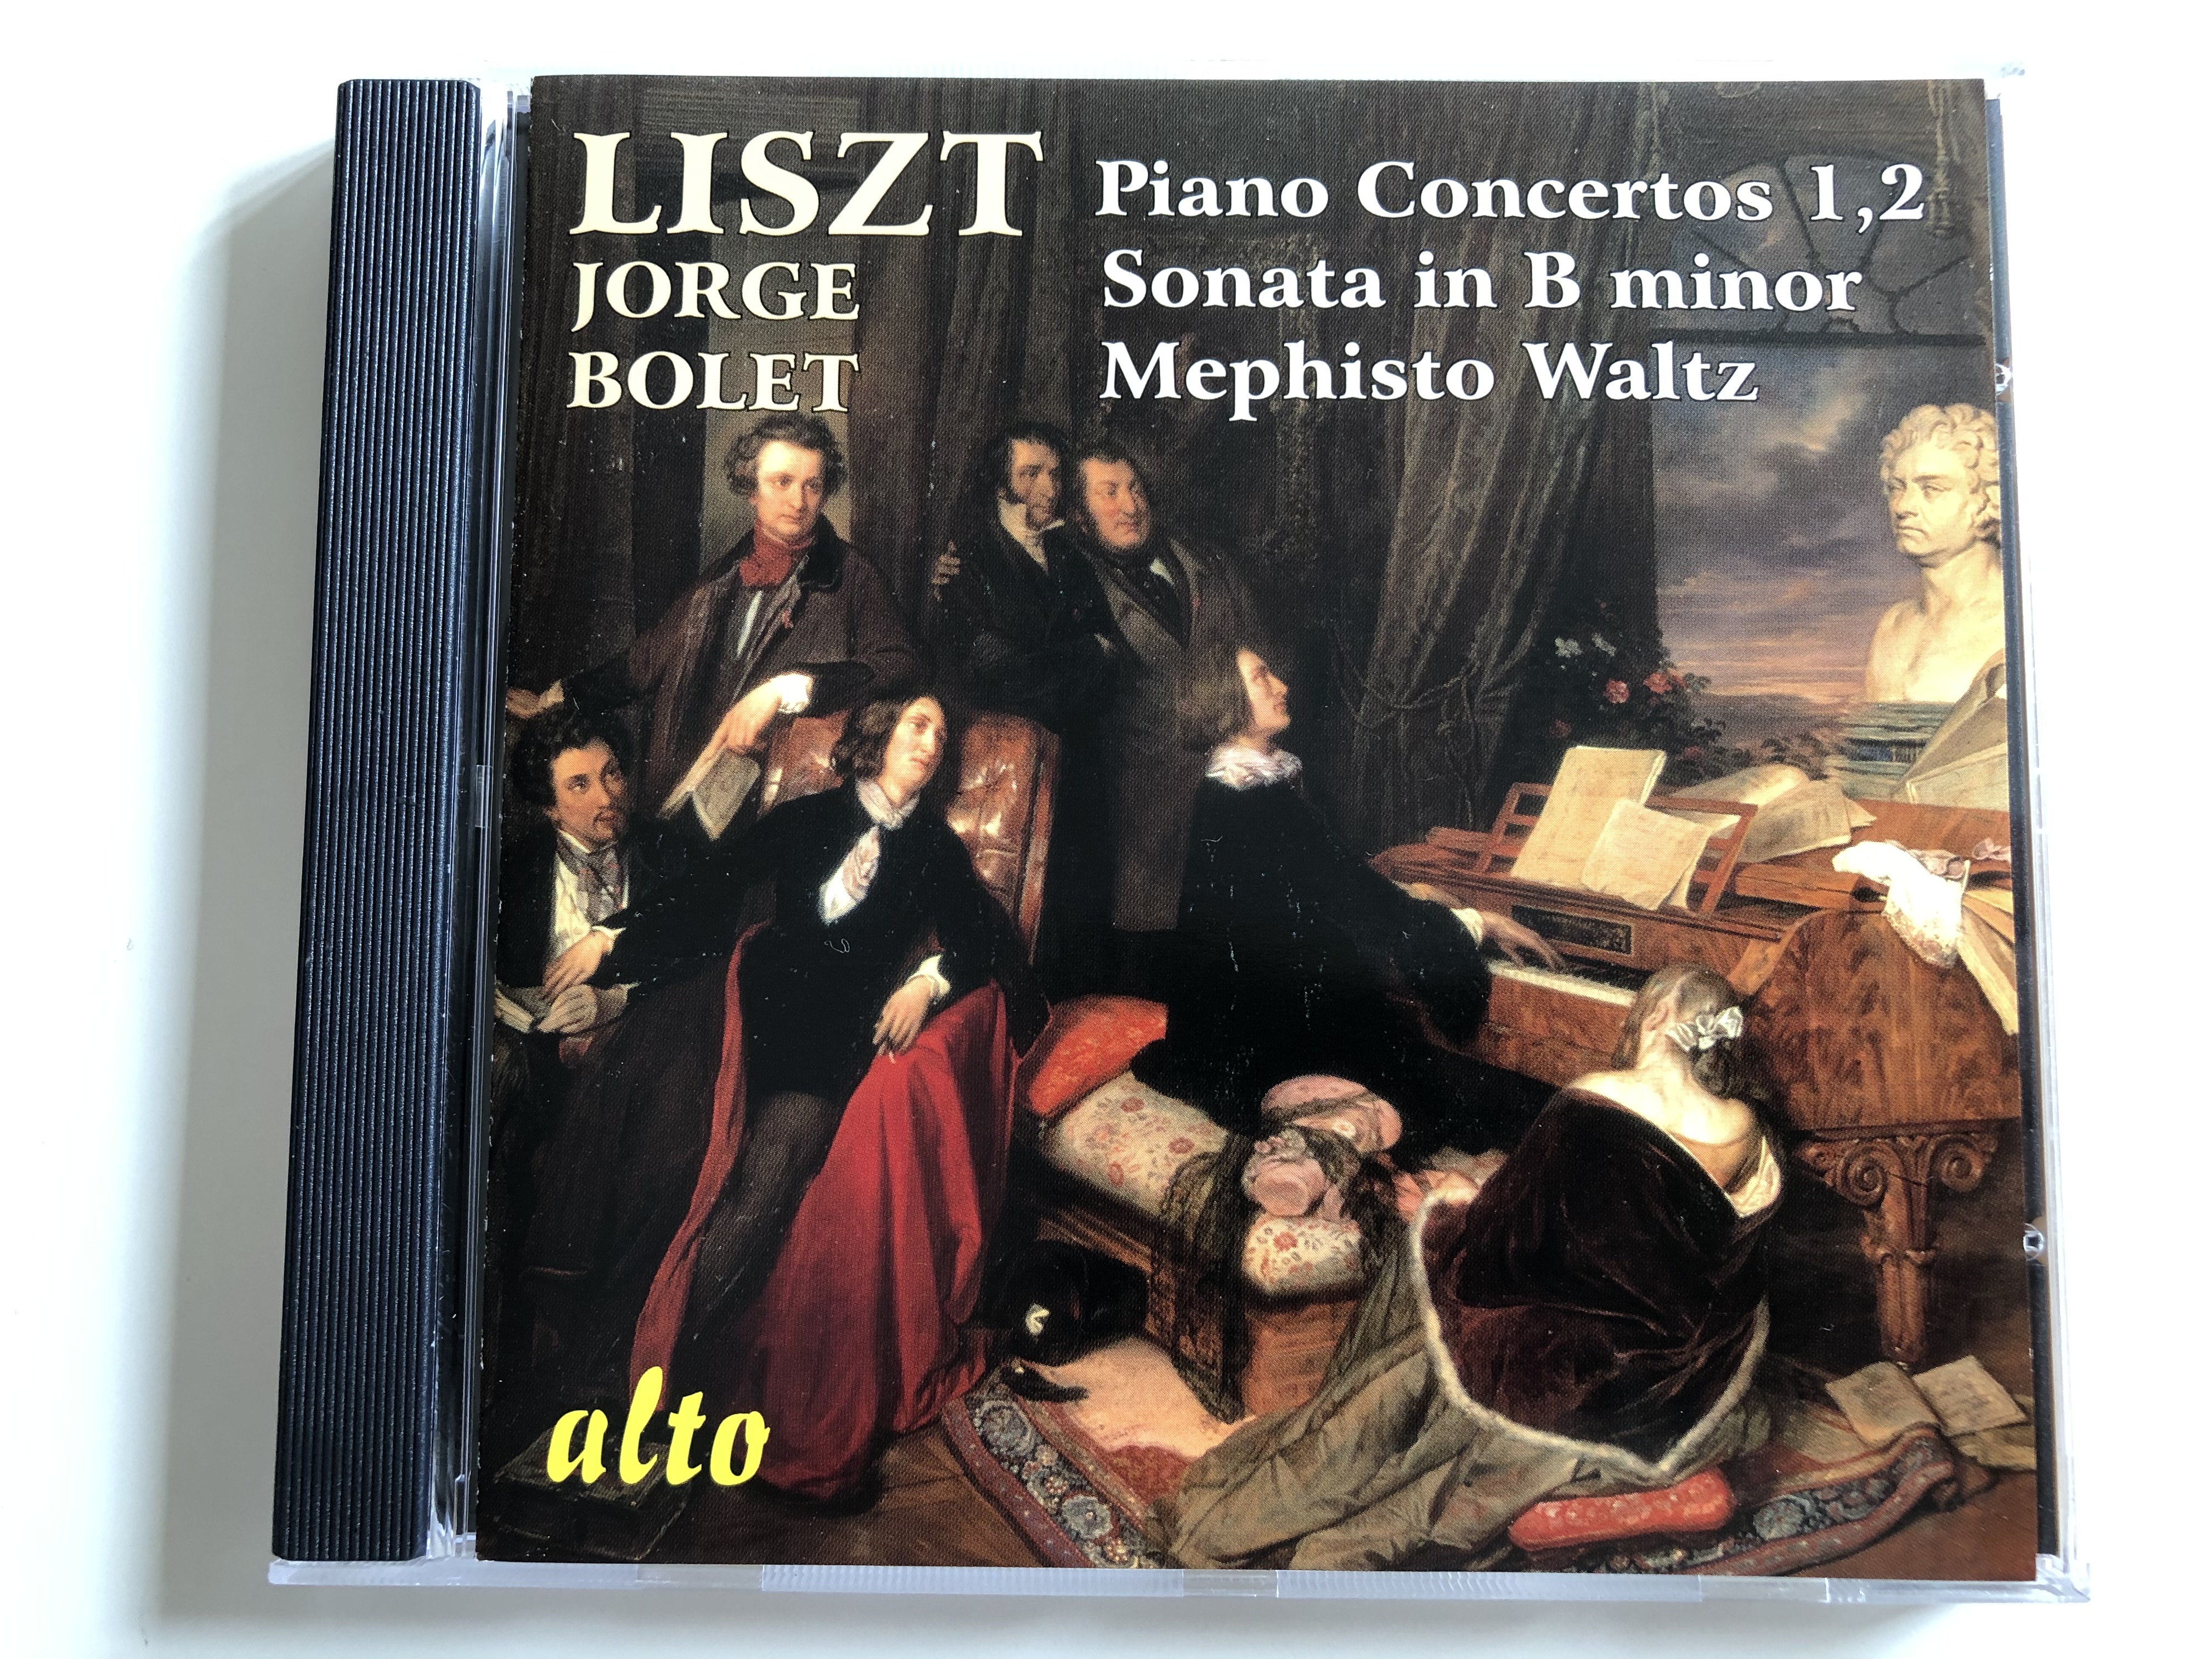 liszt-piano-concertos-1-2-sonata-in-b-minor-mephisto-waltz-jorge-bolet-piano-rochester-symphony-orchestra-cond.-david-zinman-audio-cd-2007-alc-1011-1-.jpg